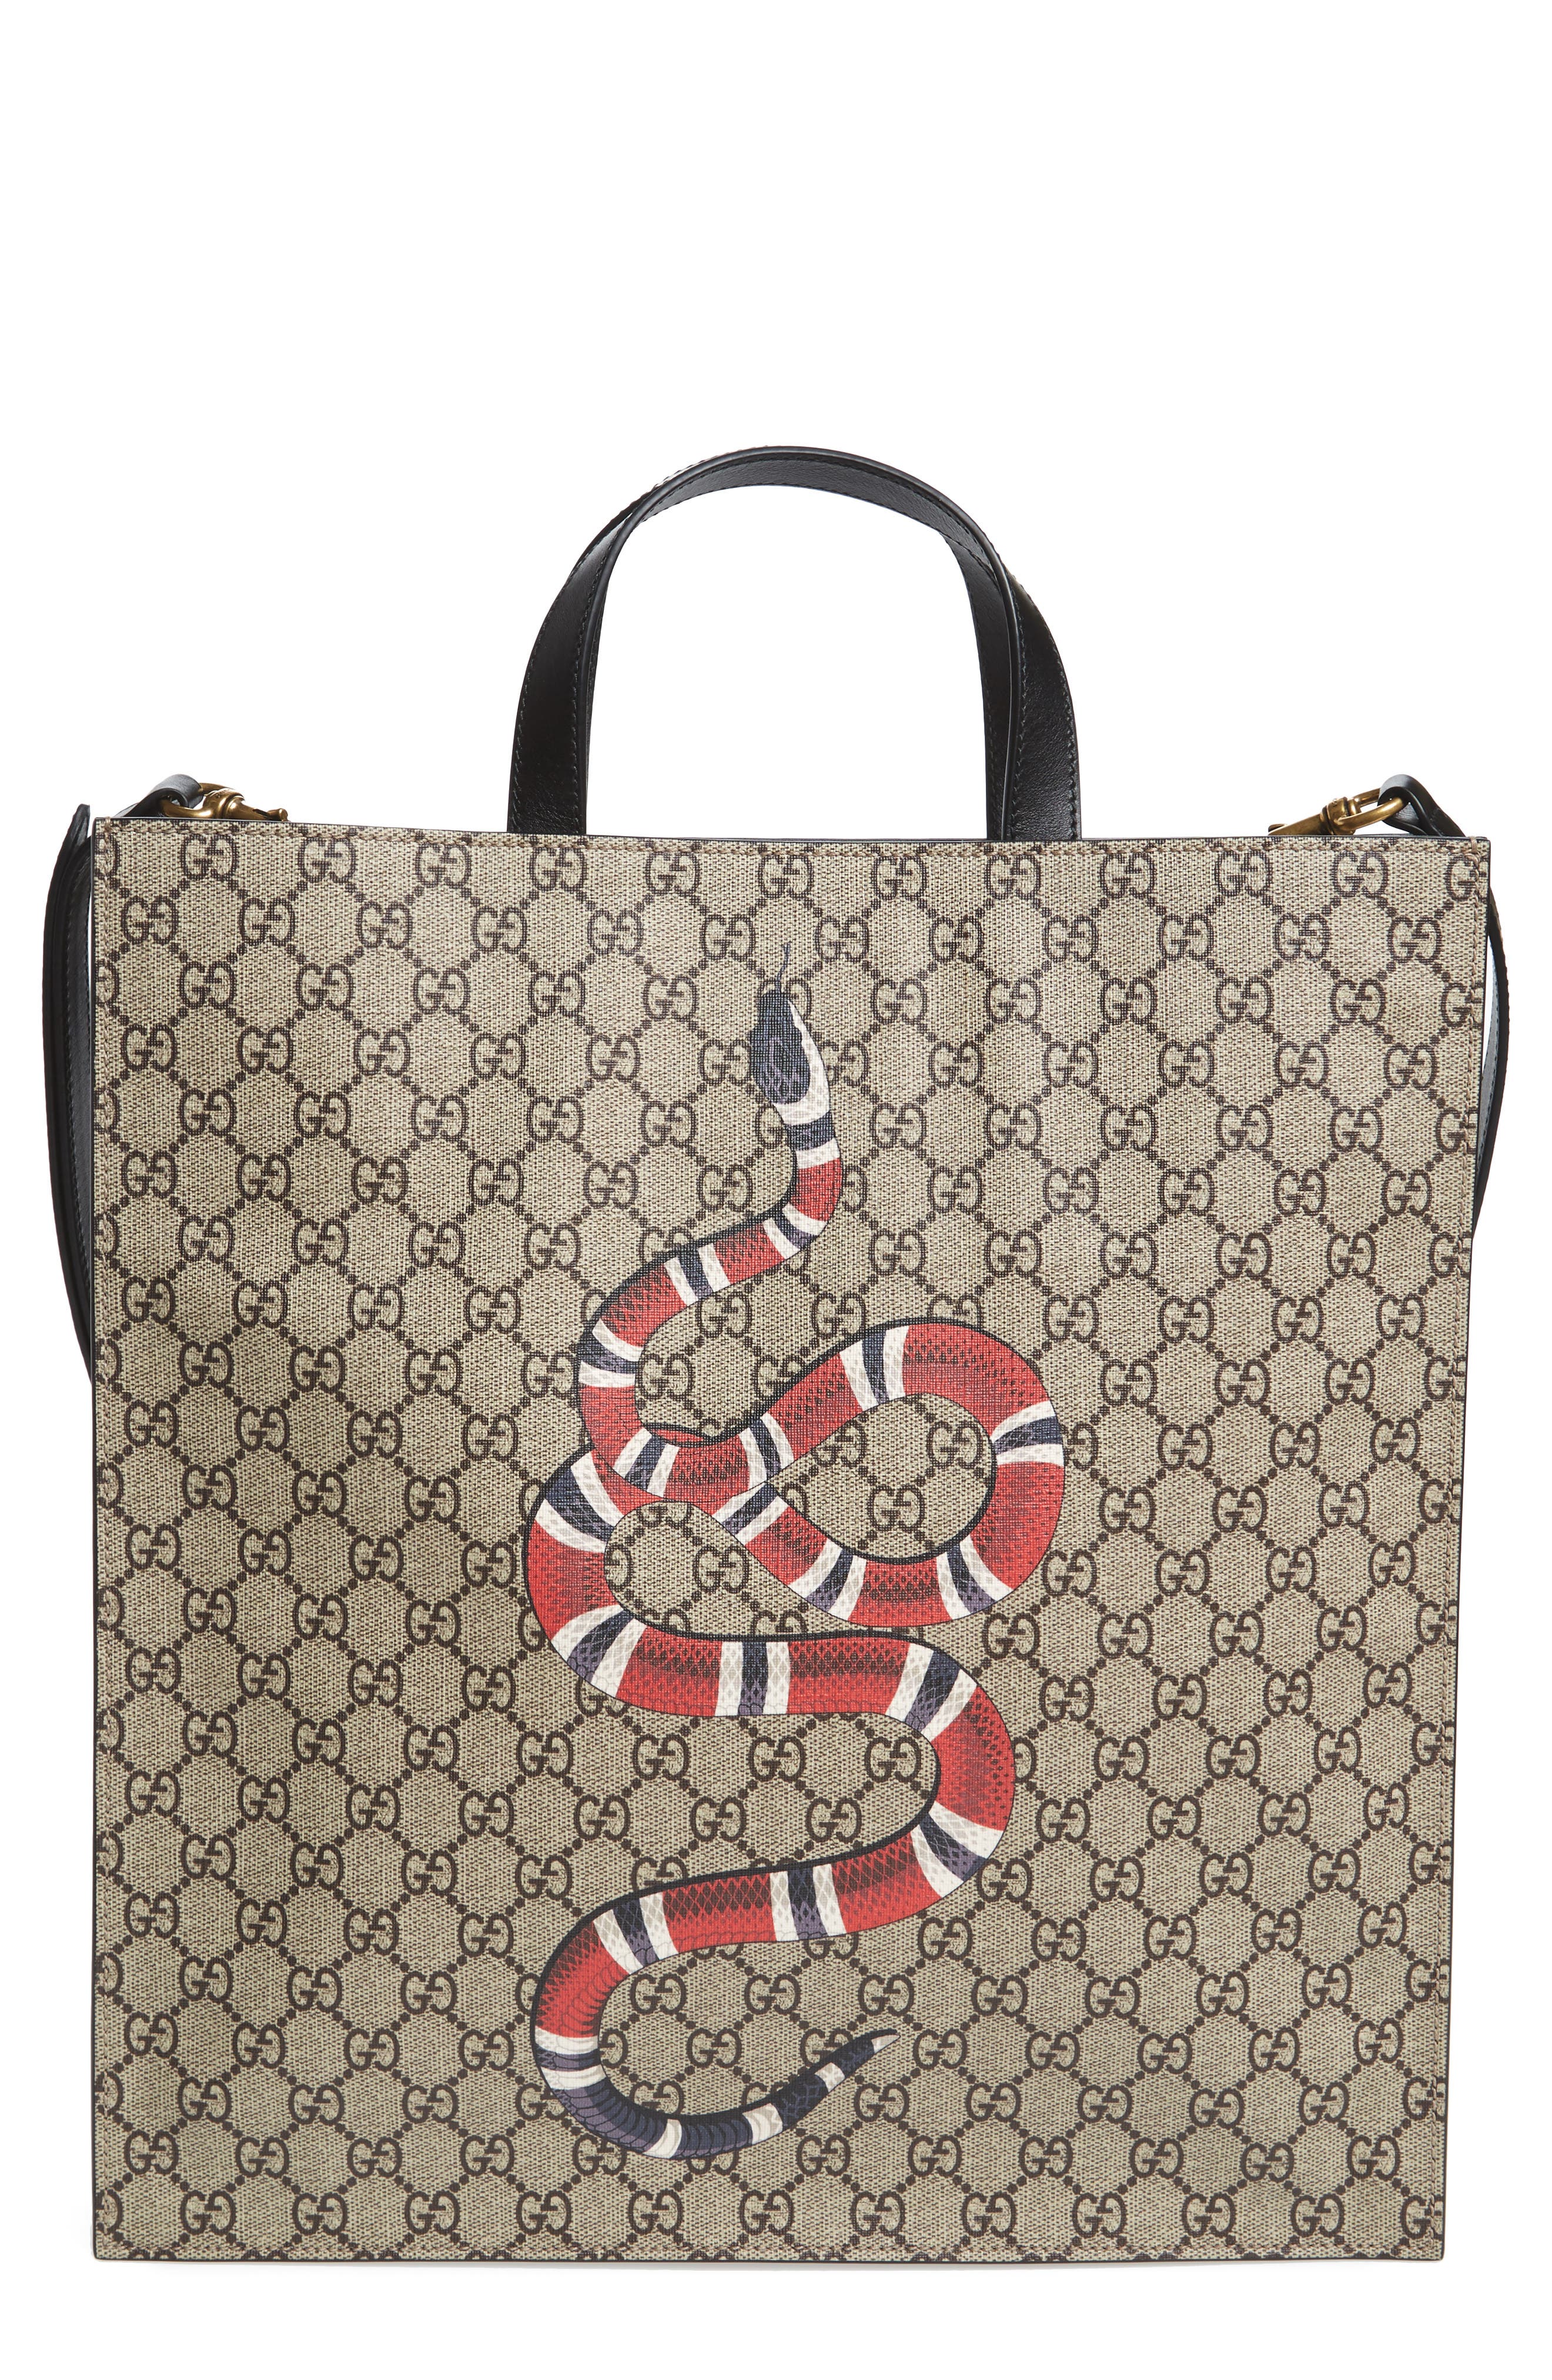 gucci snake bag price